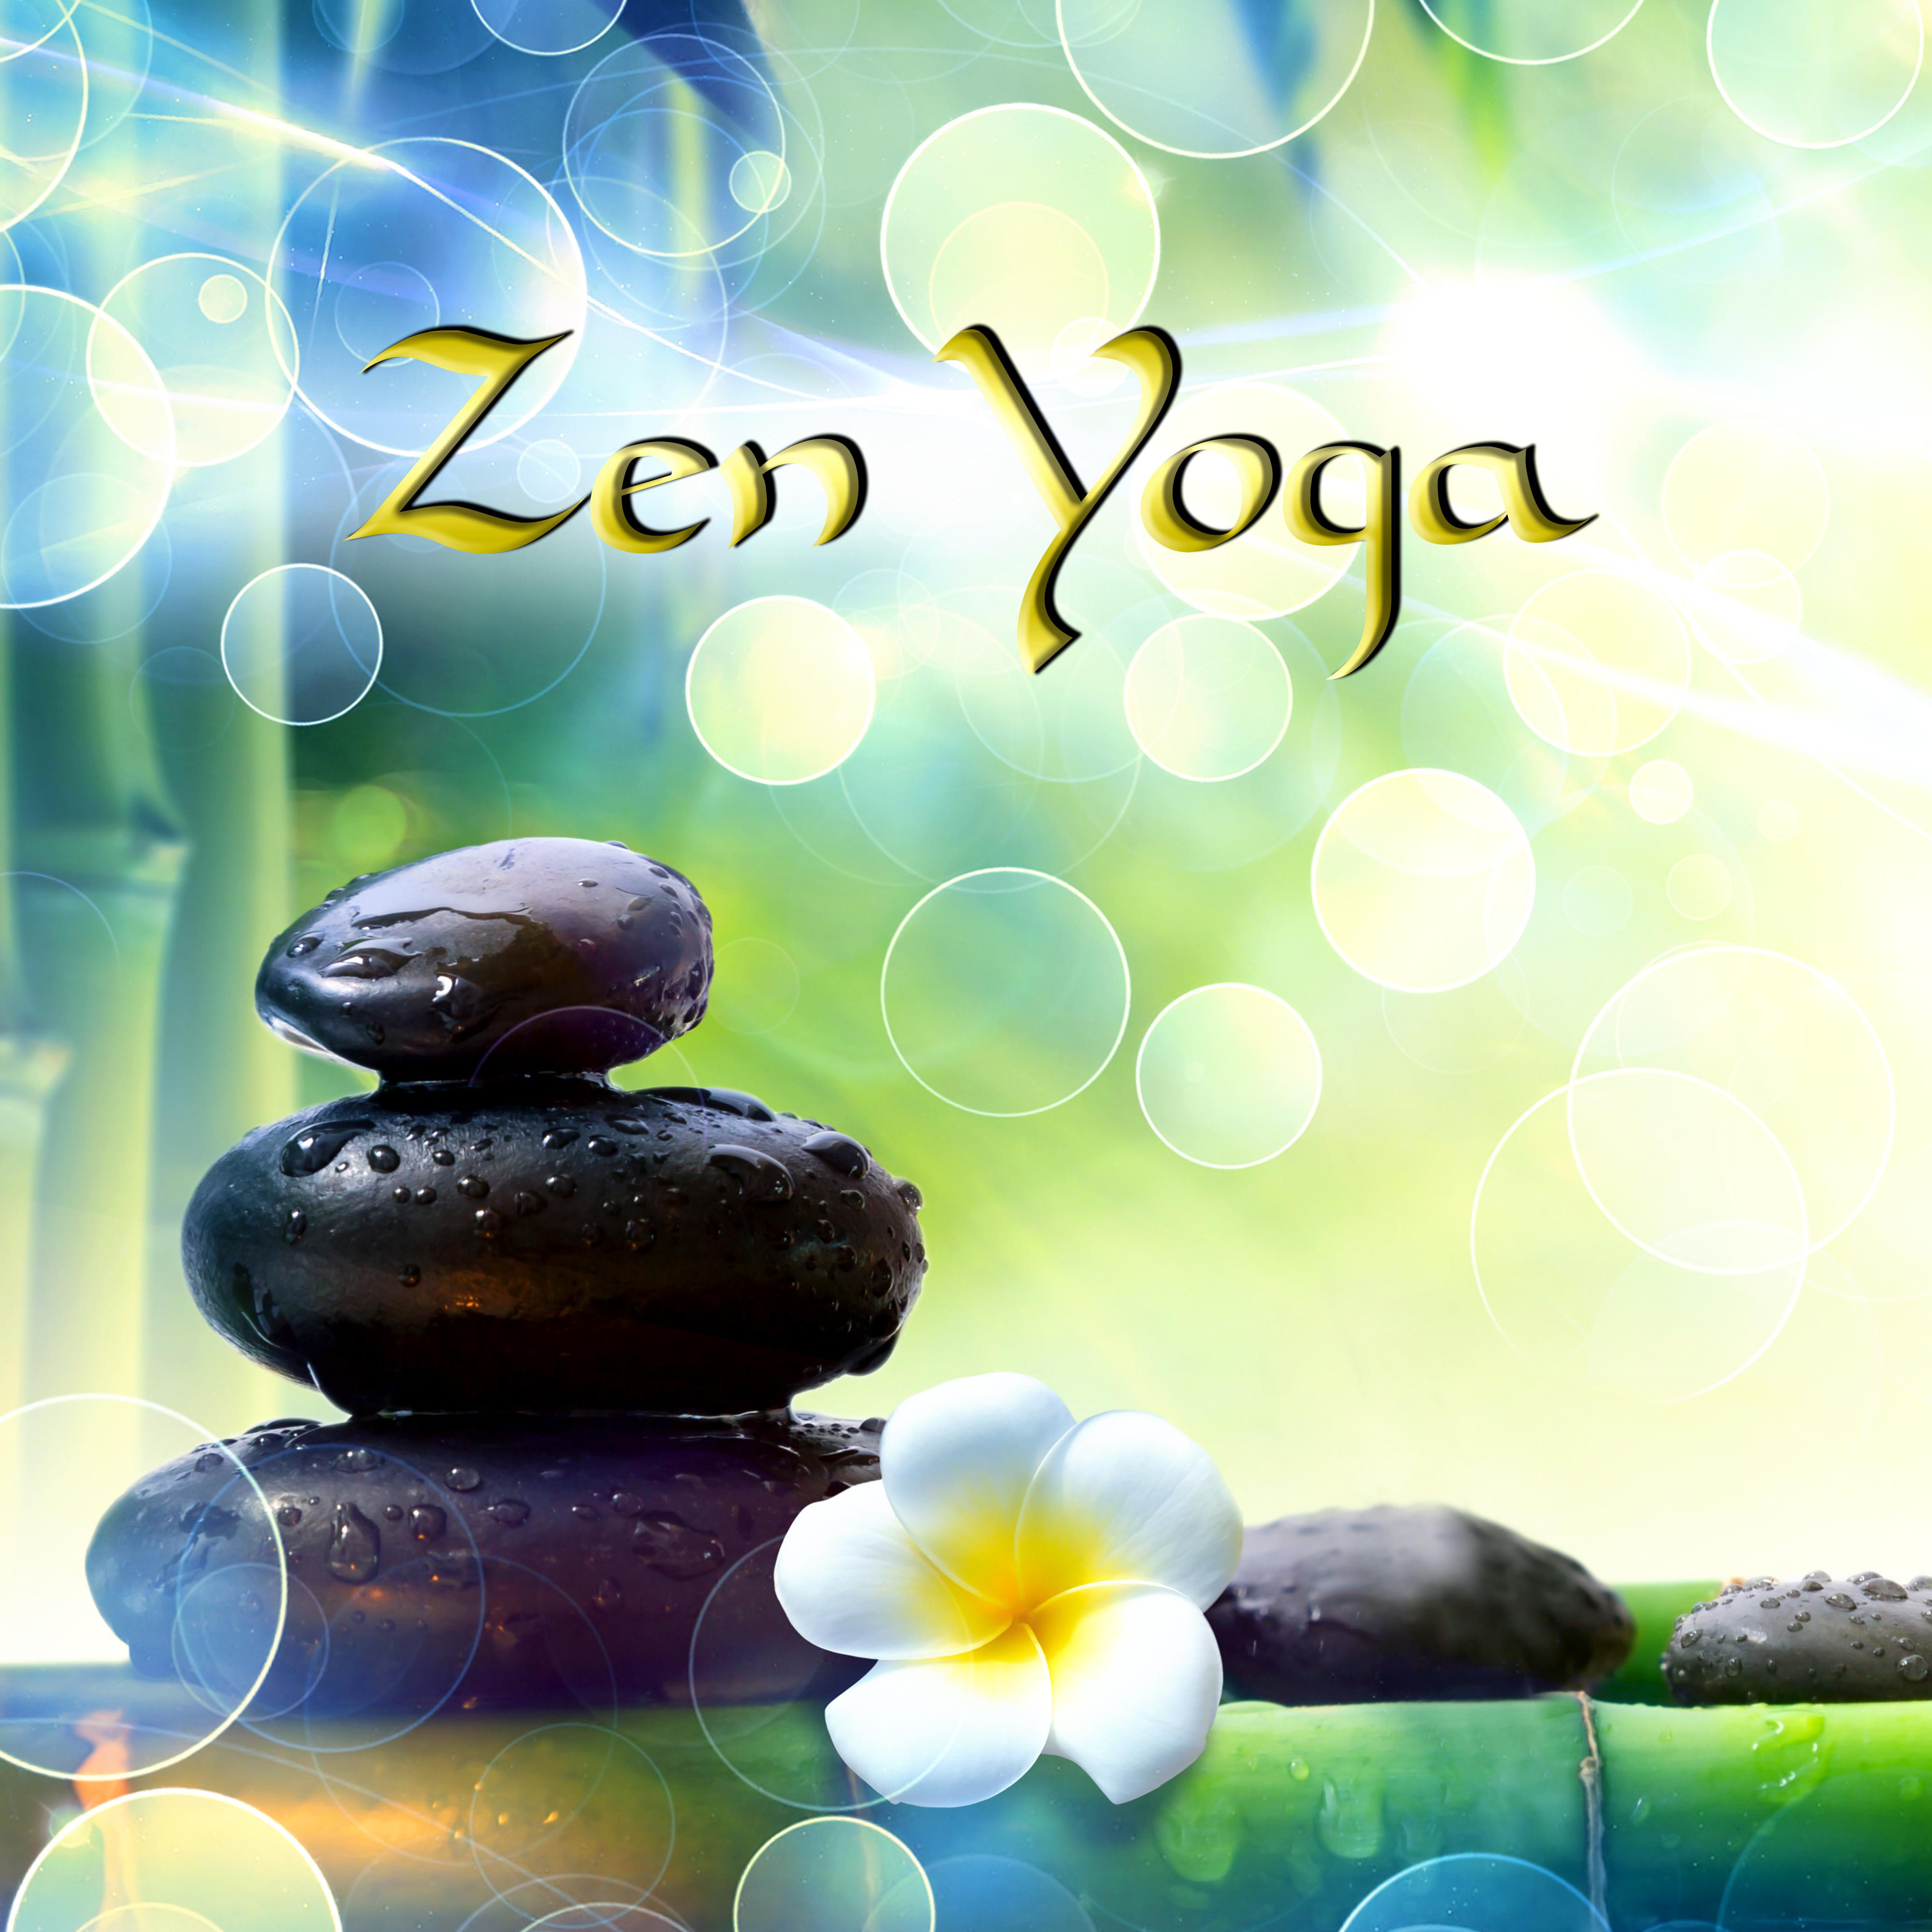 Zen Yoga  Relaxamento, Meditar, Fluta, AntiStress, Mu sica New Age, Asia tica, Sono Reparador, Mu sica Reiki, Natureza